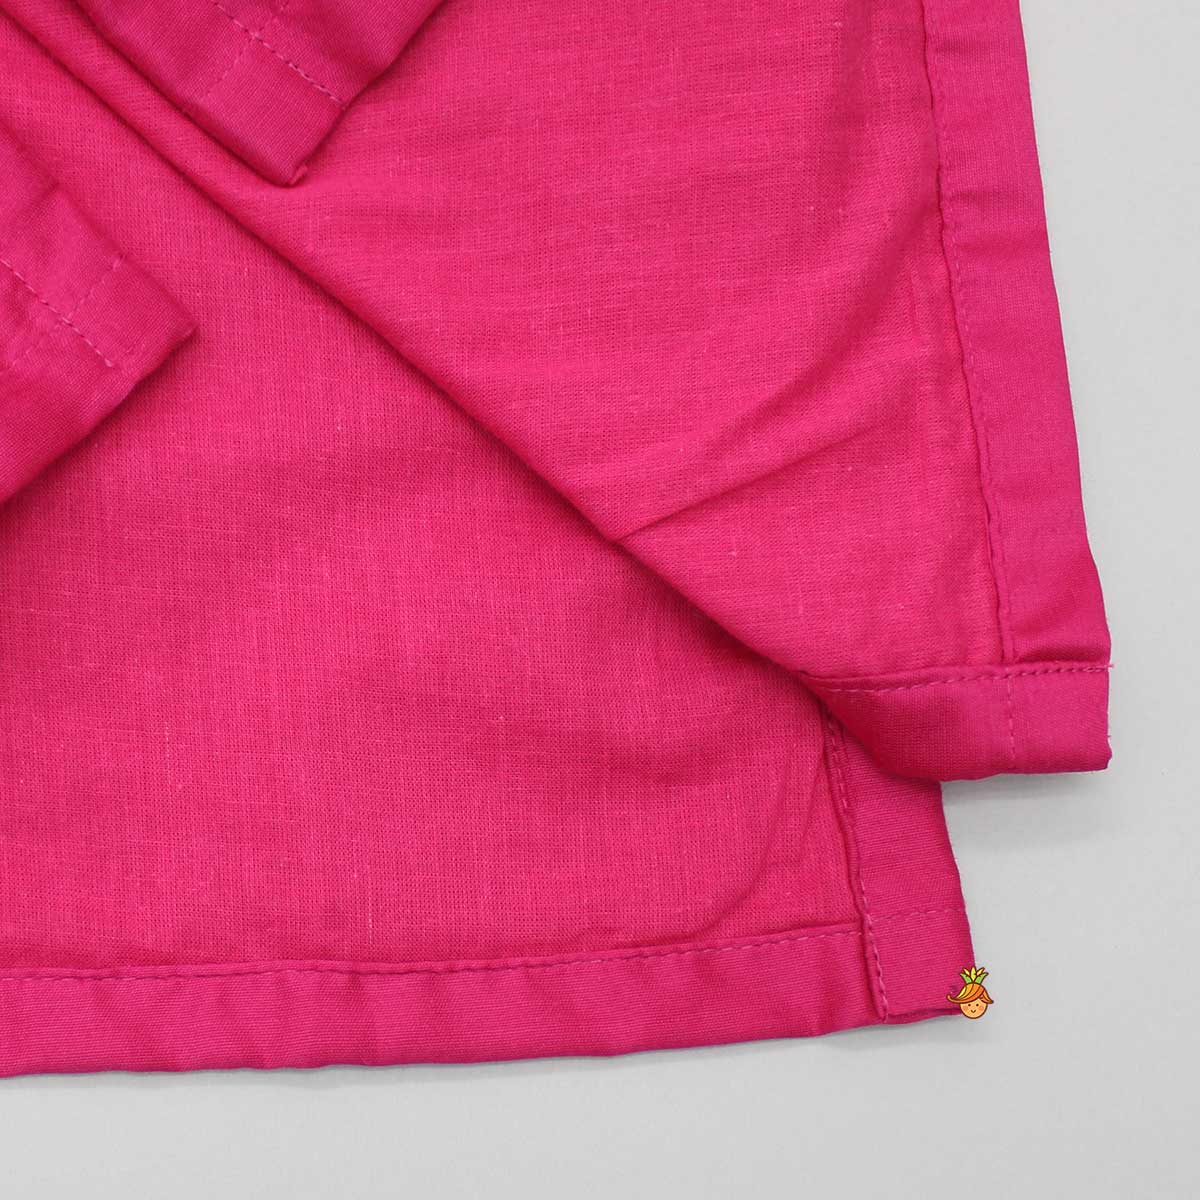 Pink Kurta With Attached Jacket And Pyjama